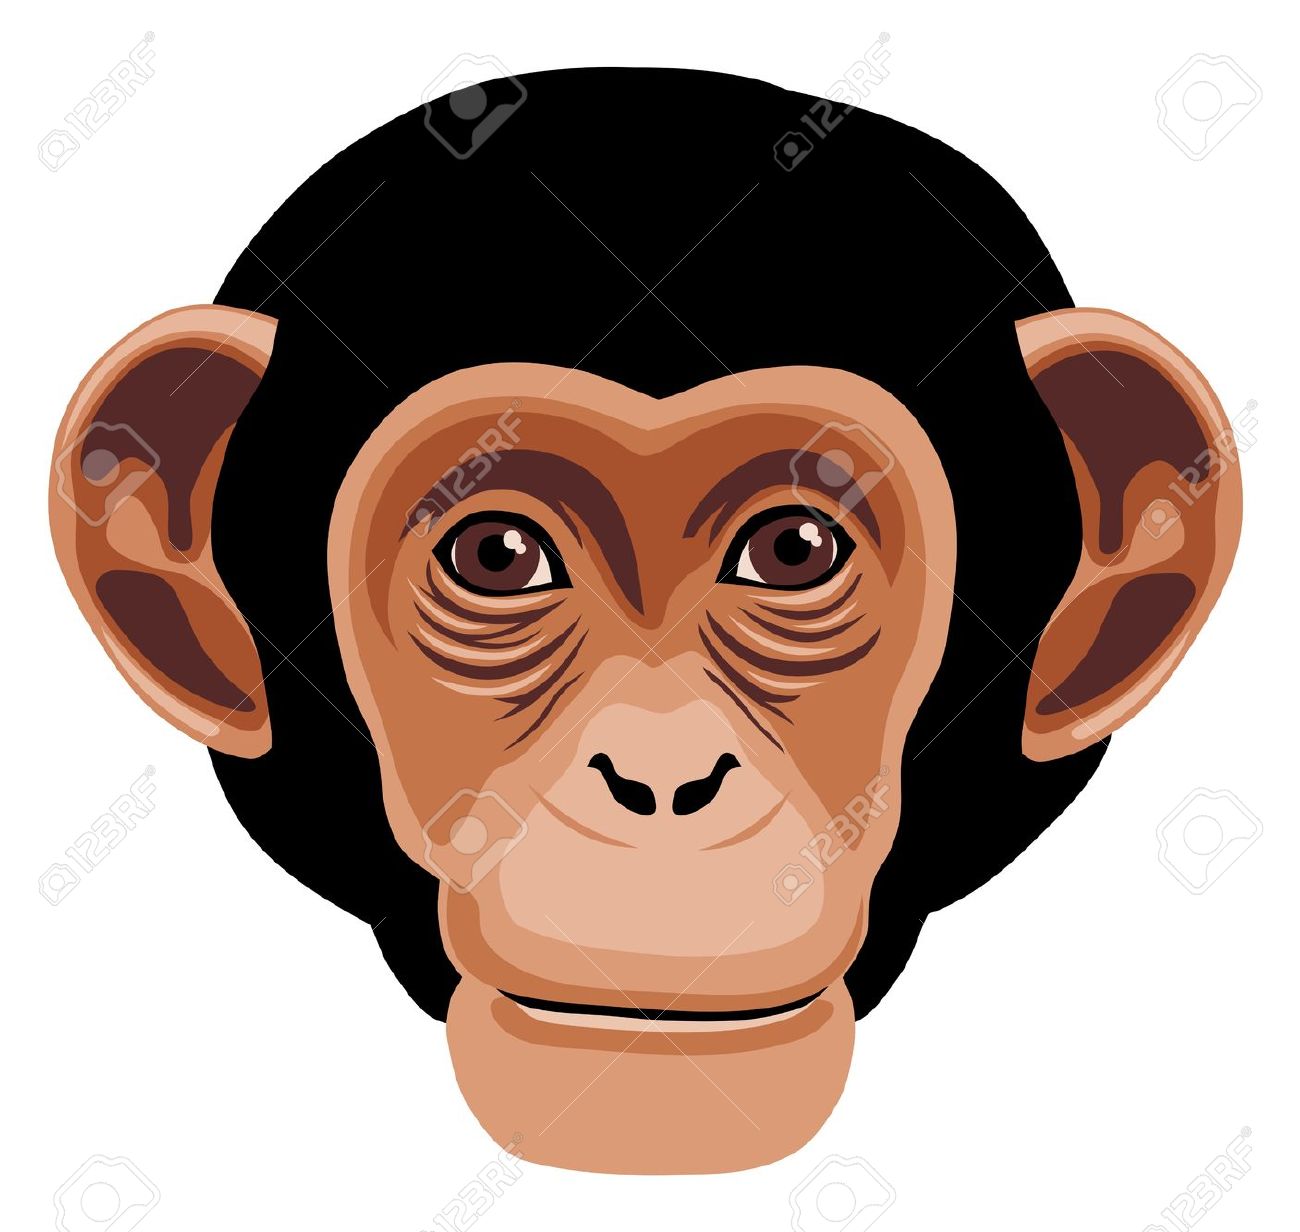 Monkey face clipart 17